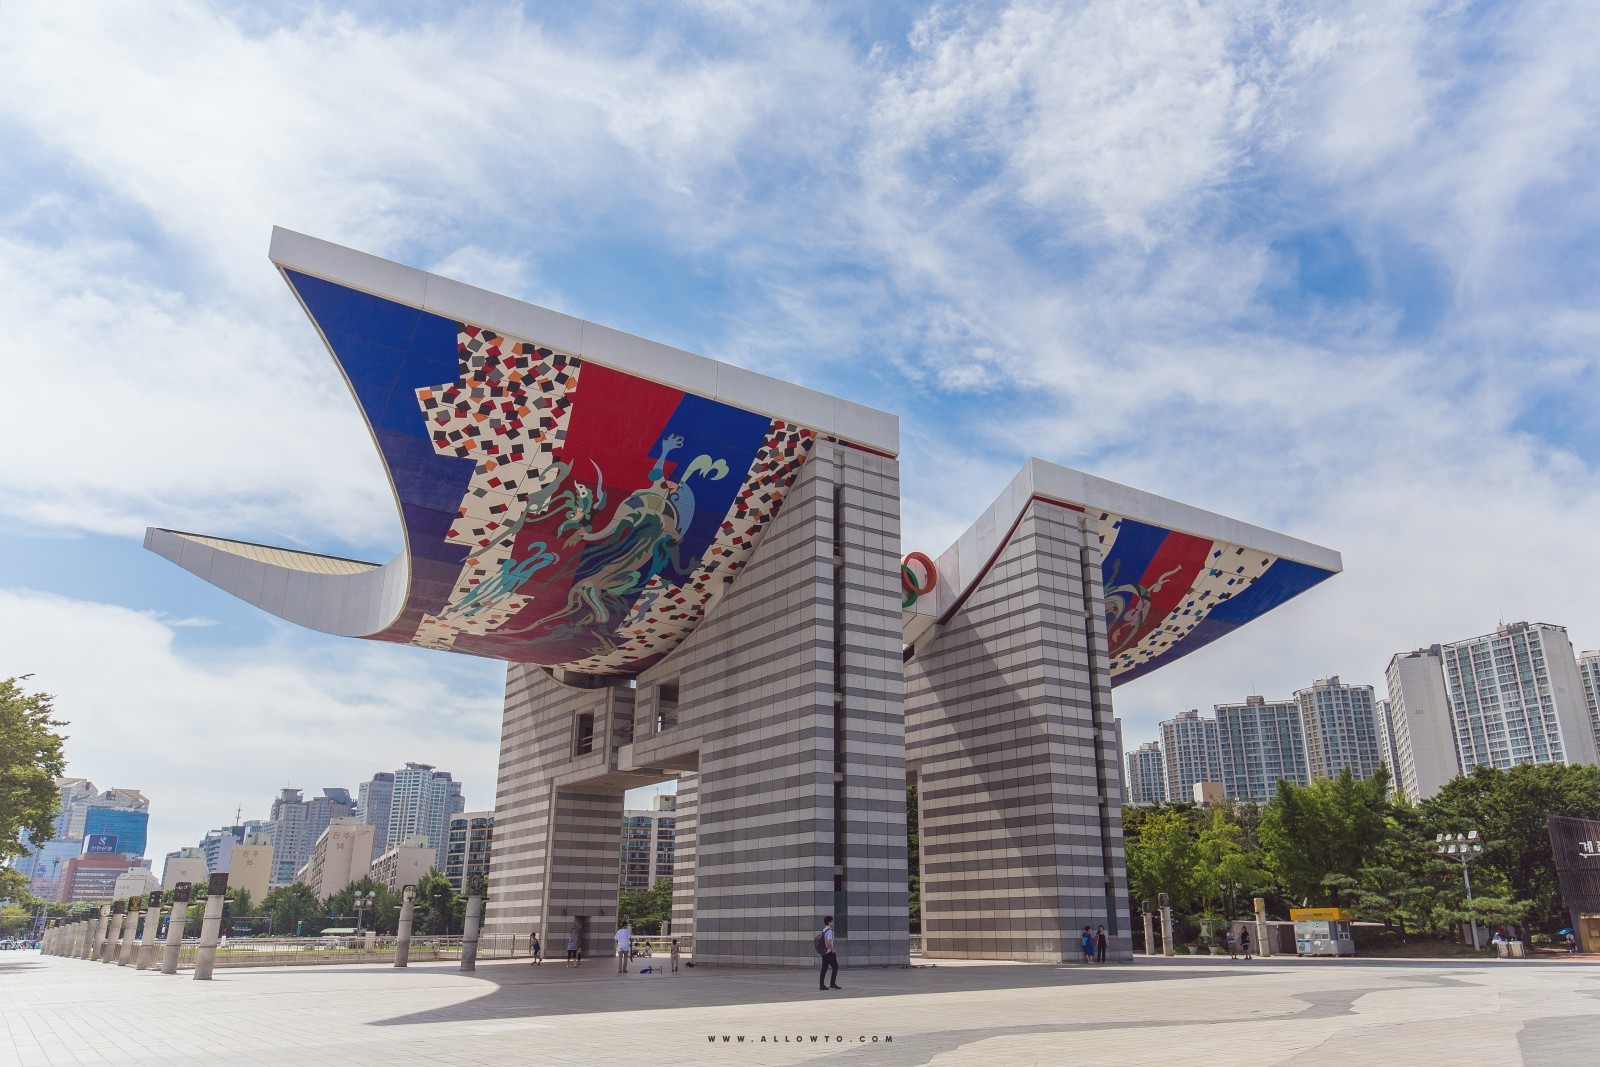 xypex 올림픽 기념물 korea olympic monument